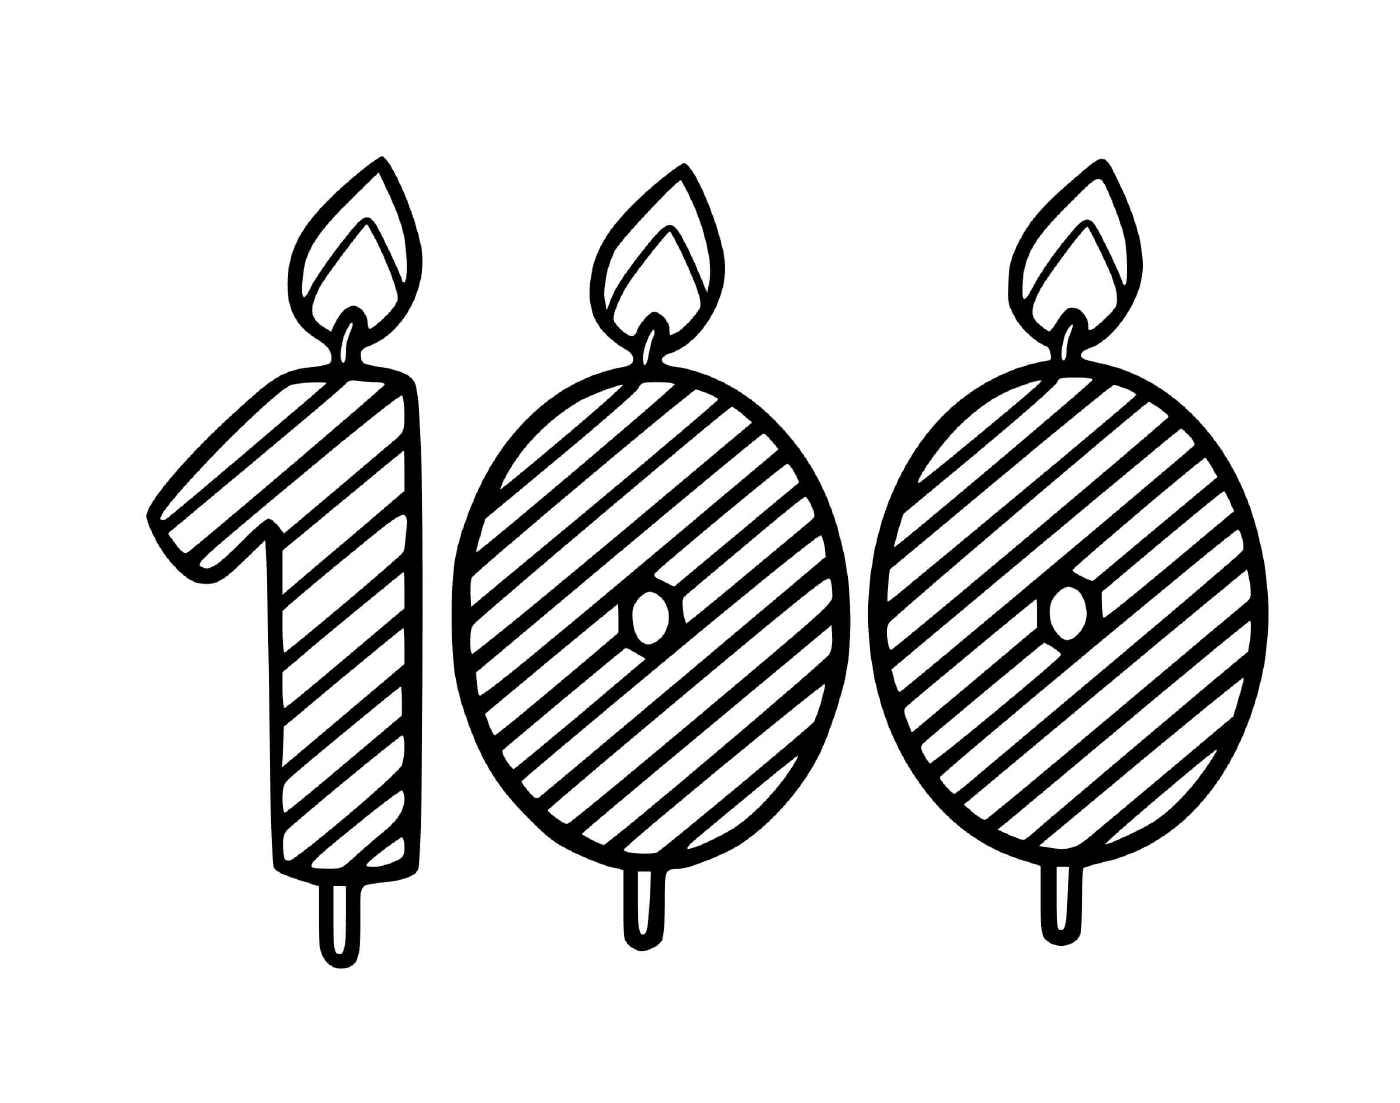  Um conjunto de velas indicando 1 0 0 